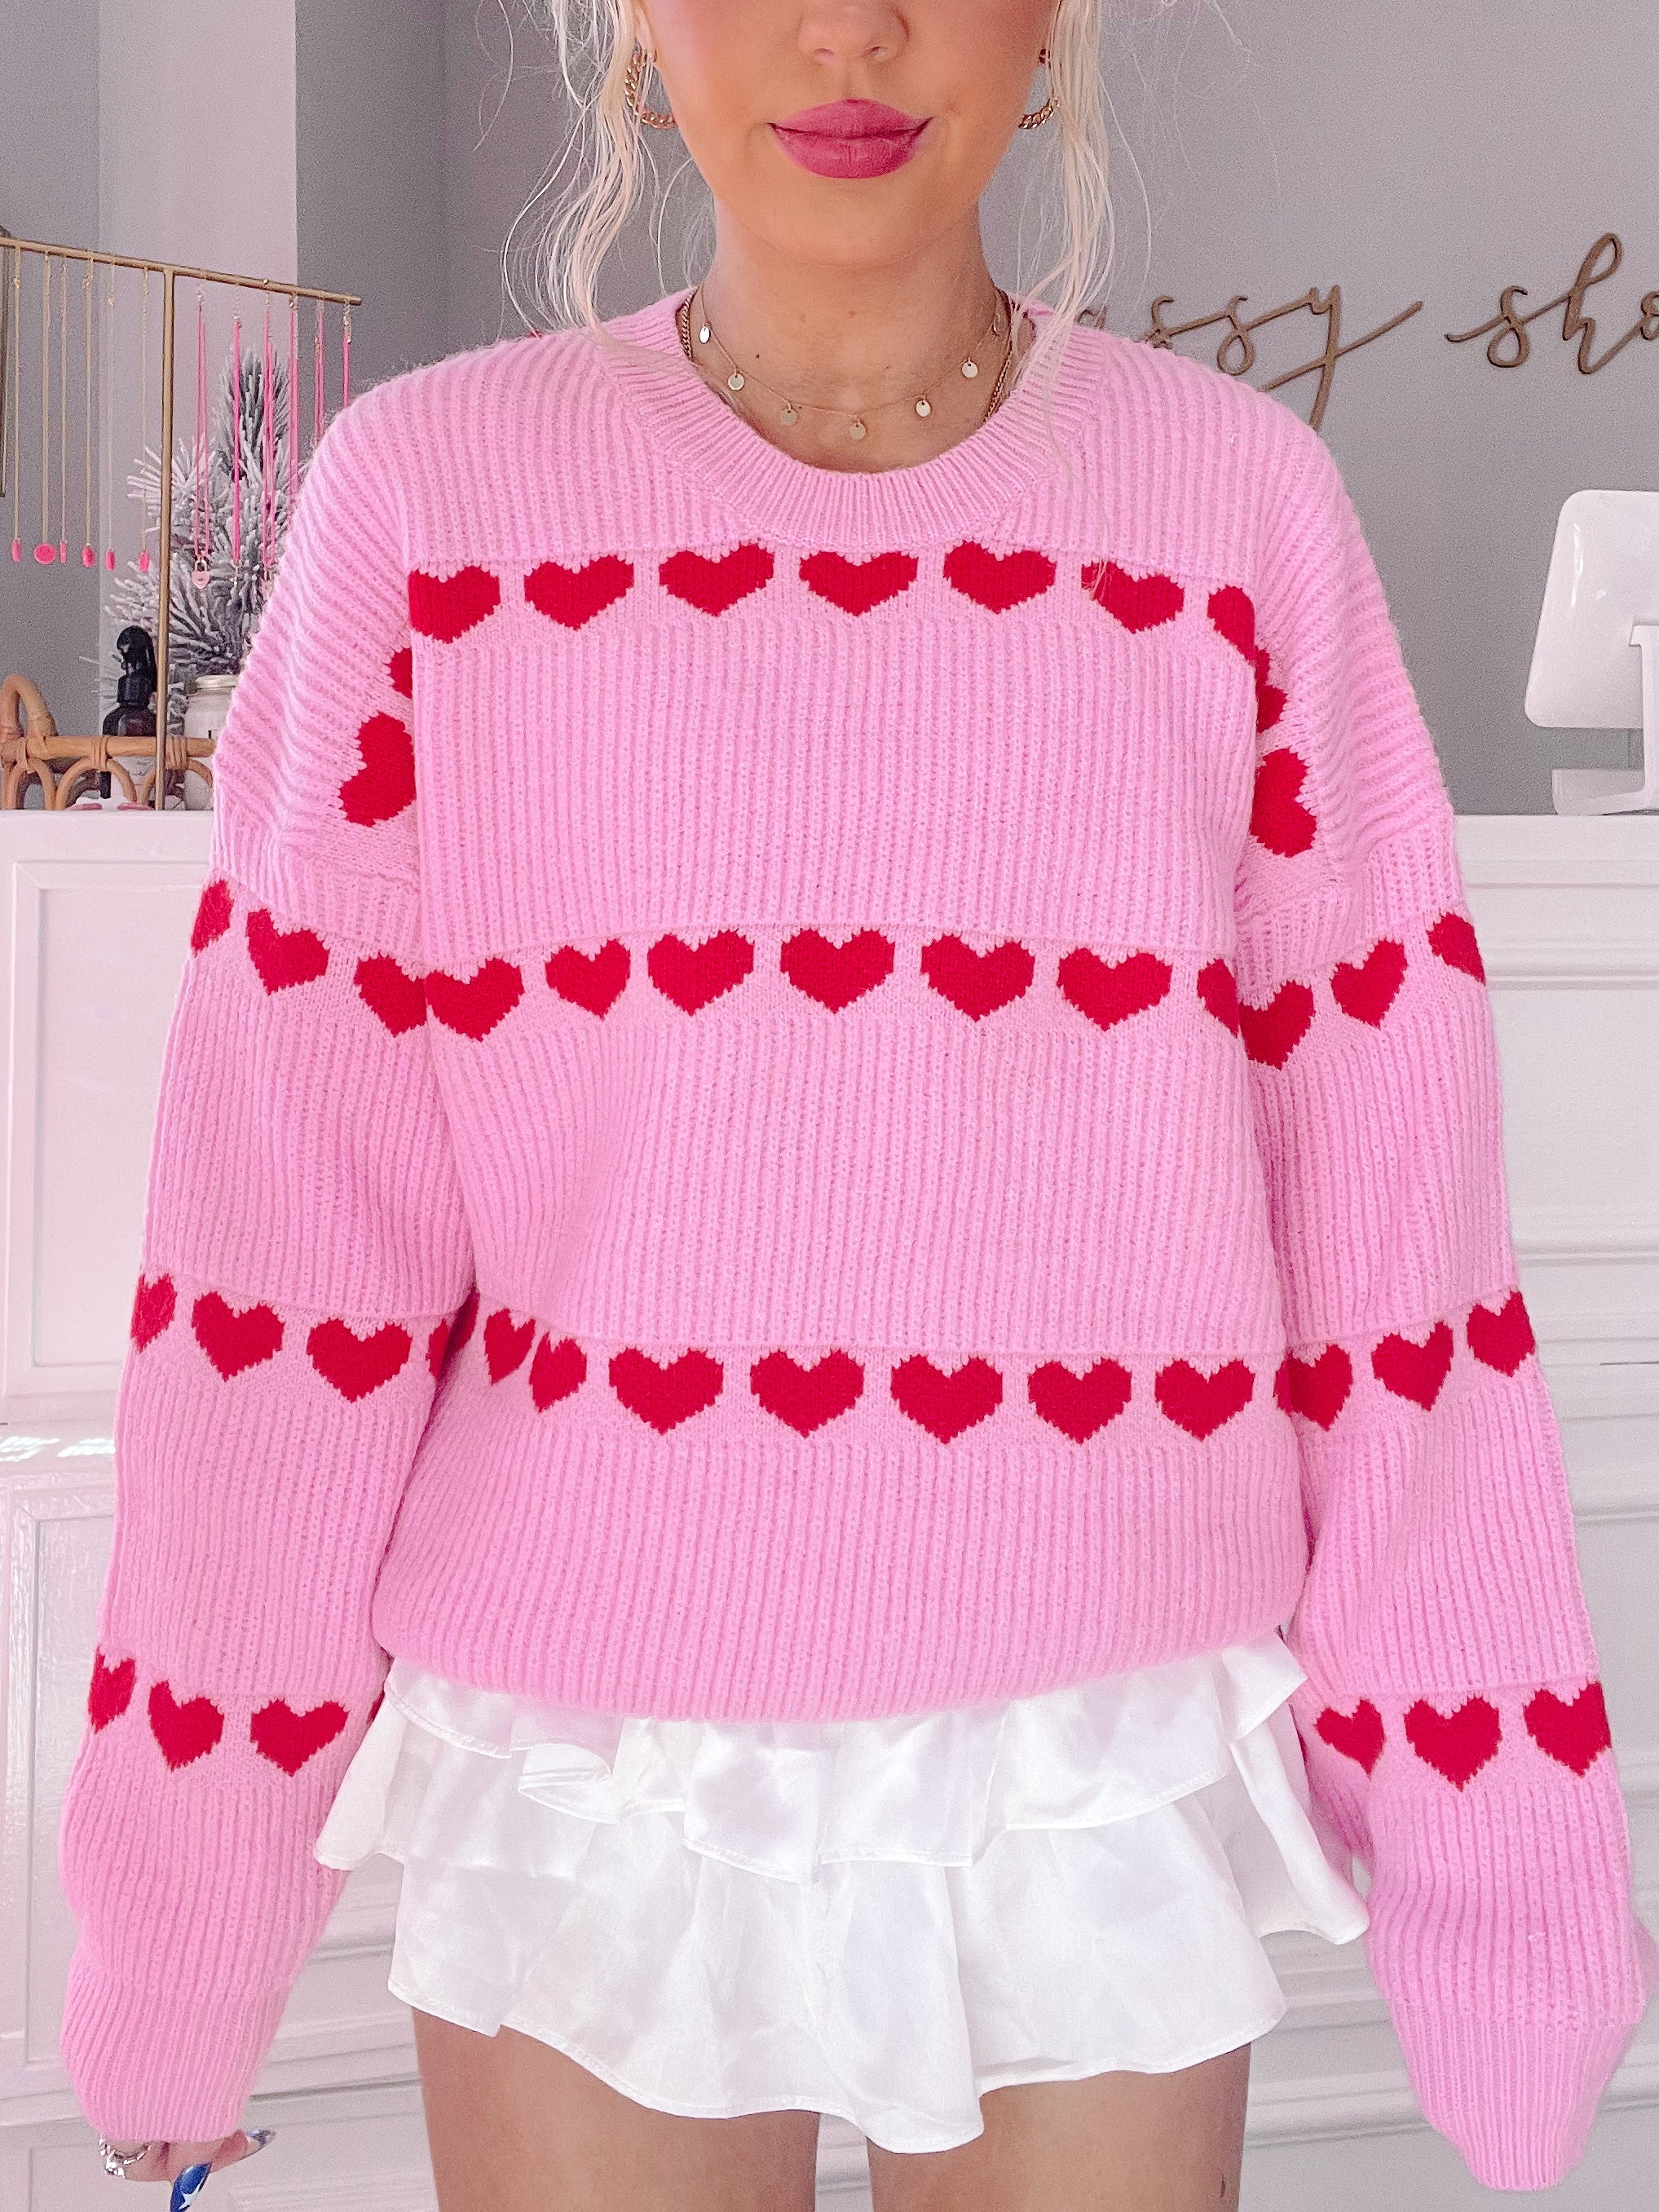 Hearts for You Sweater | sassyshortcake.com | Sassy Shortcake